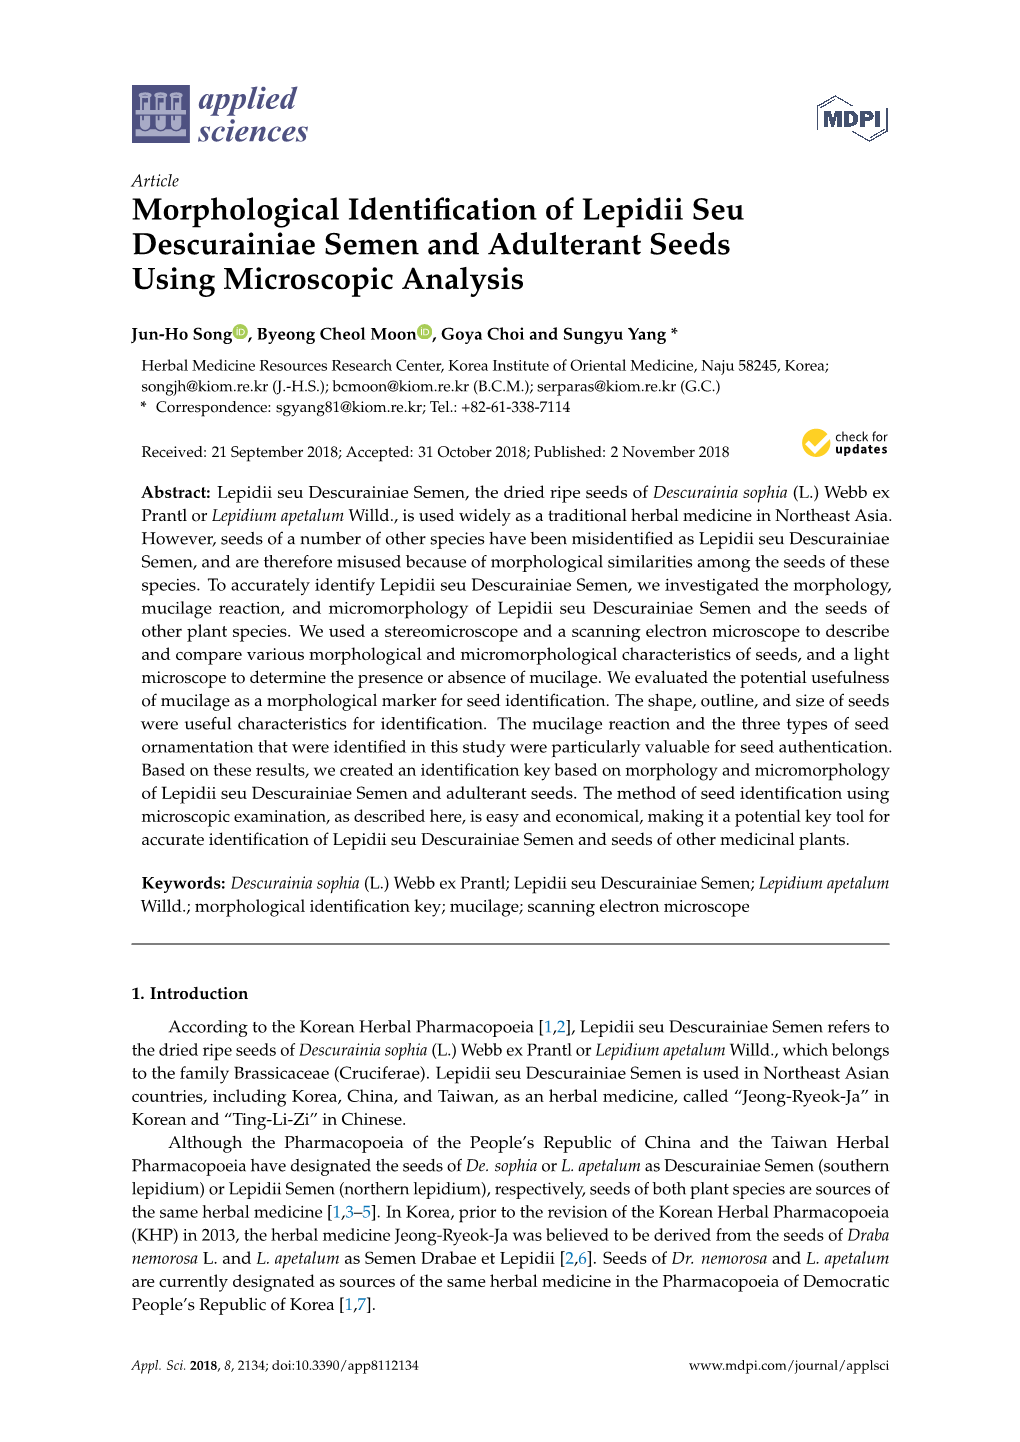 Morphological Identification of Lepidii Seu Descurainiae Semen and Adulterant Seeds Using Microscopic Analysis